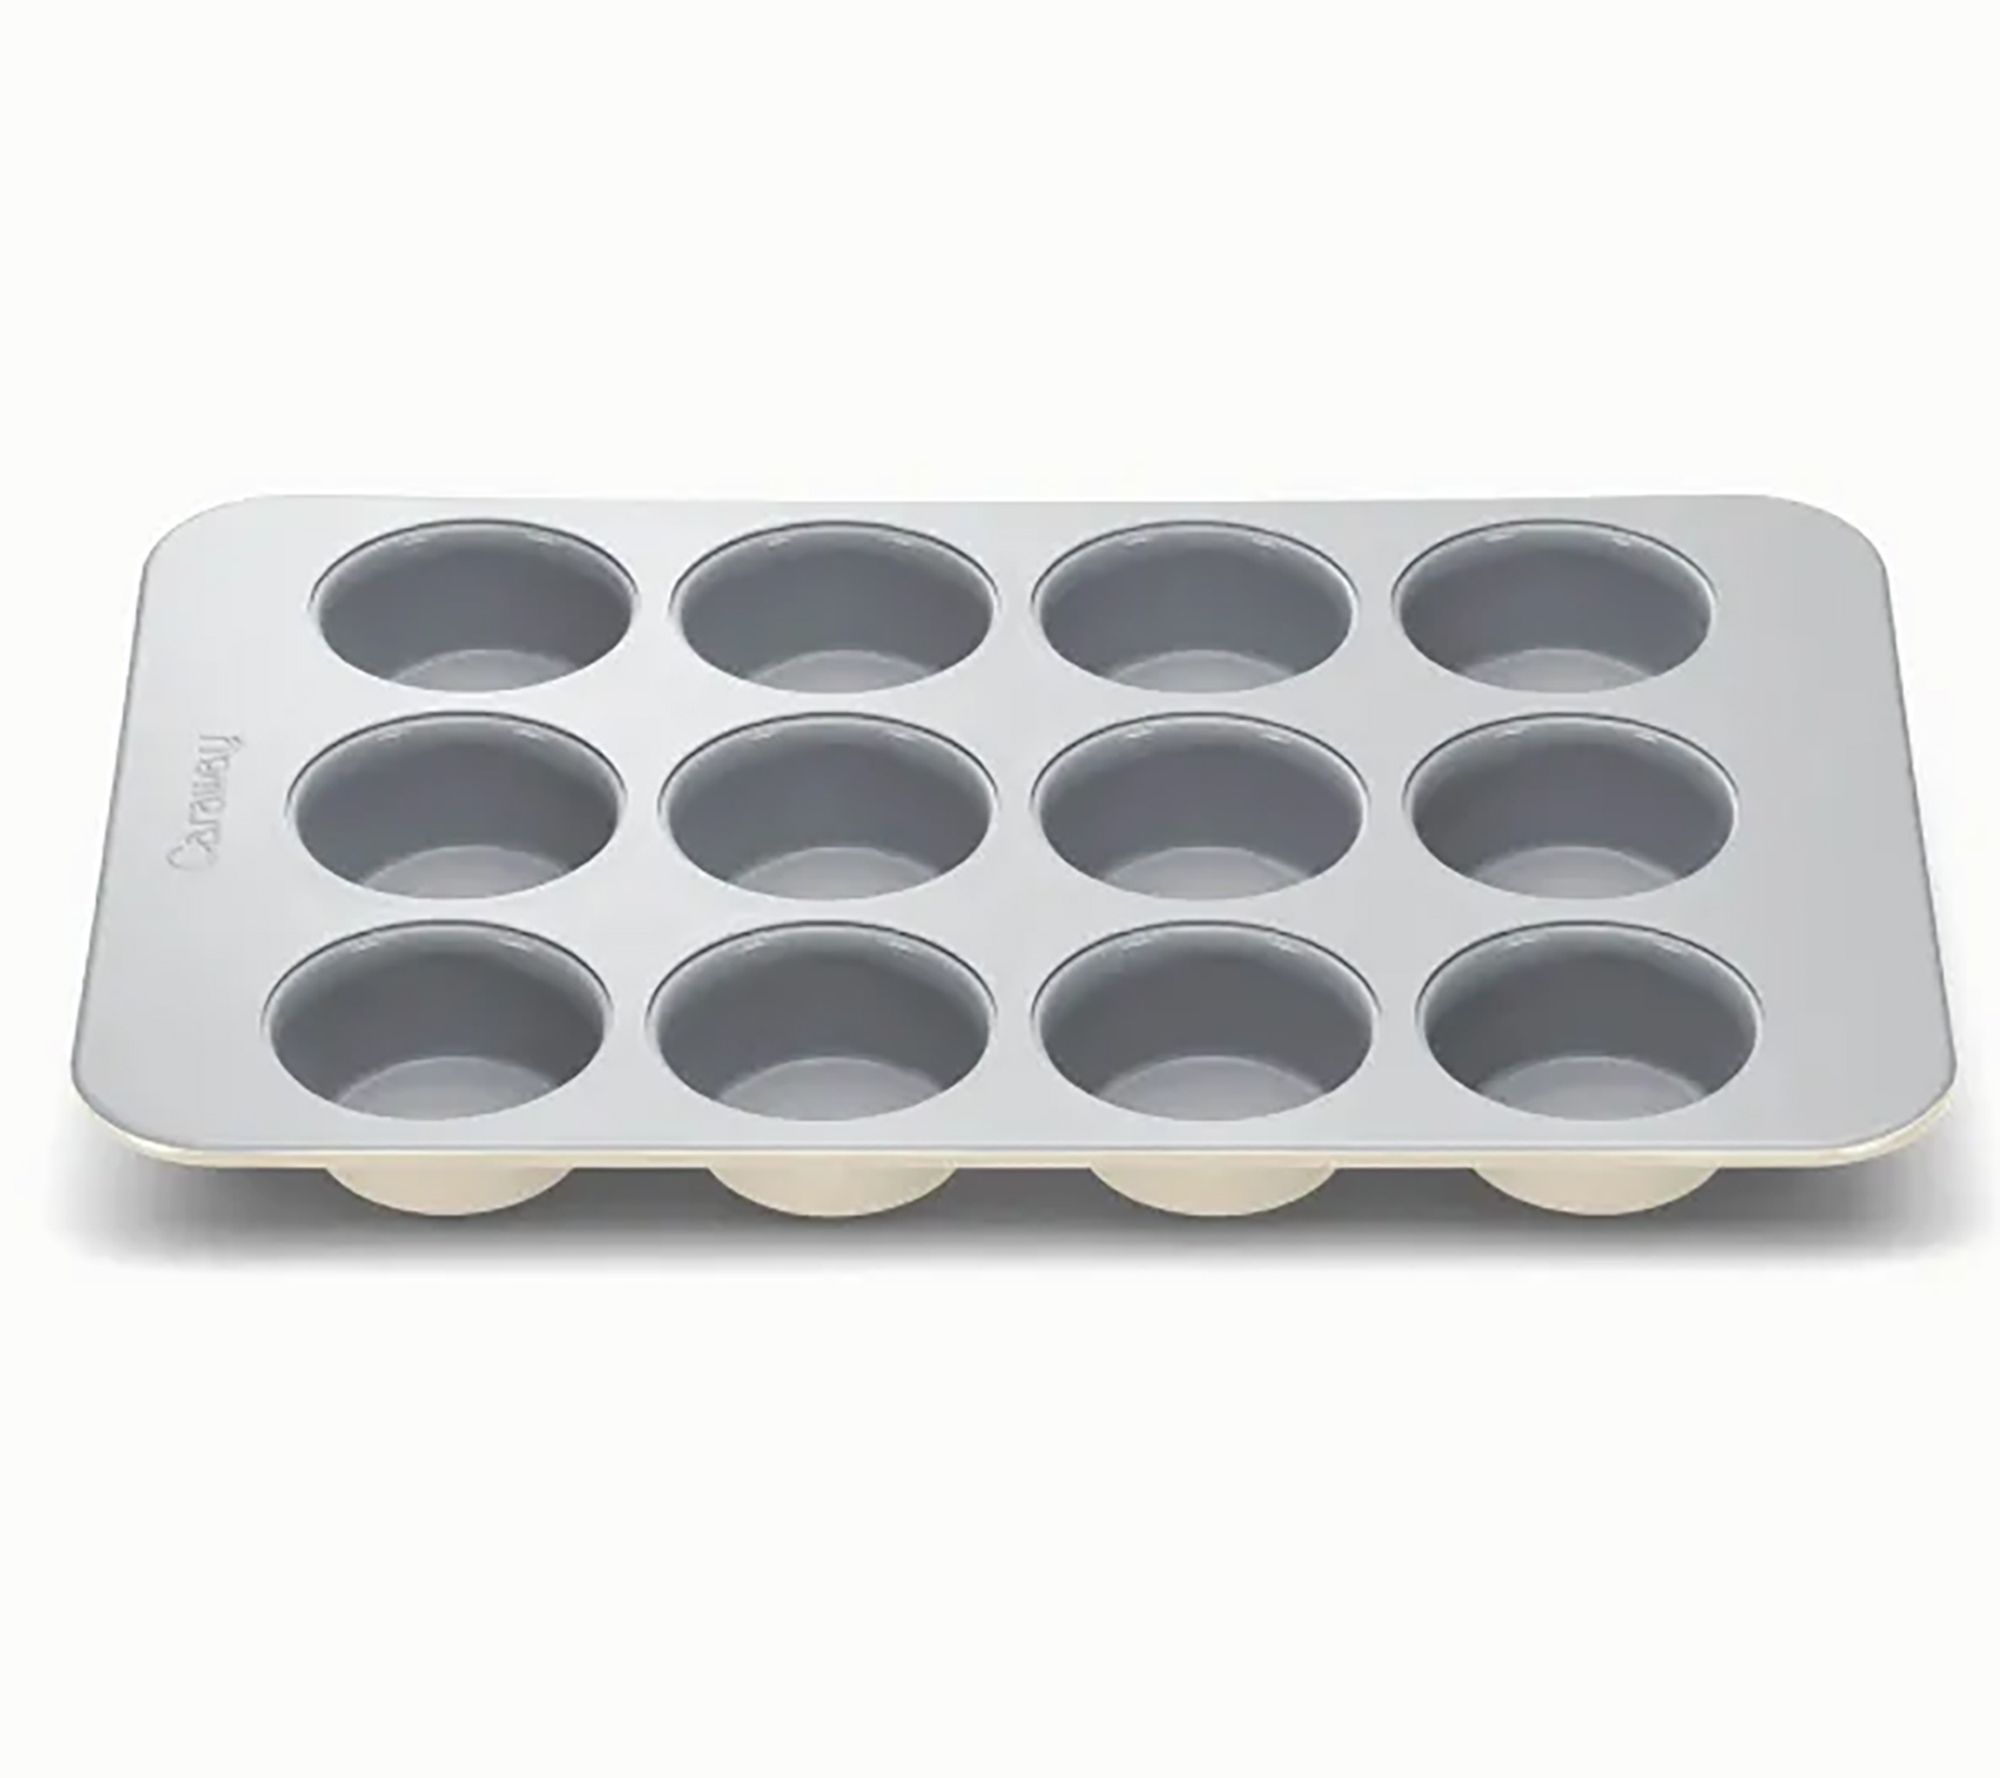 Farberware 12-Cup Muffin Pan Nonstick Bakeware Gray Cupcake Christmas  Kitchen